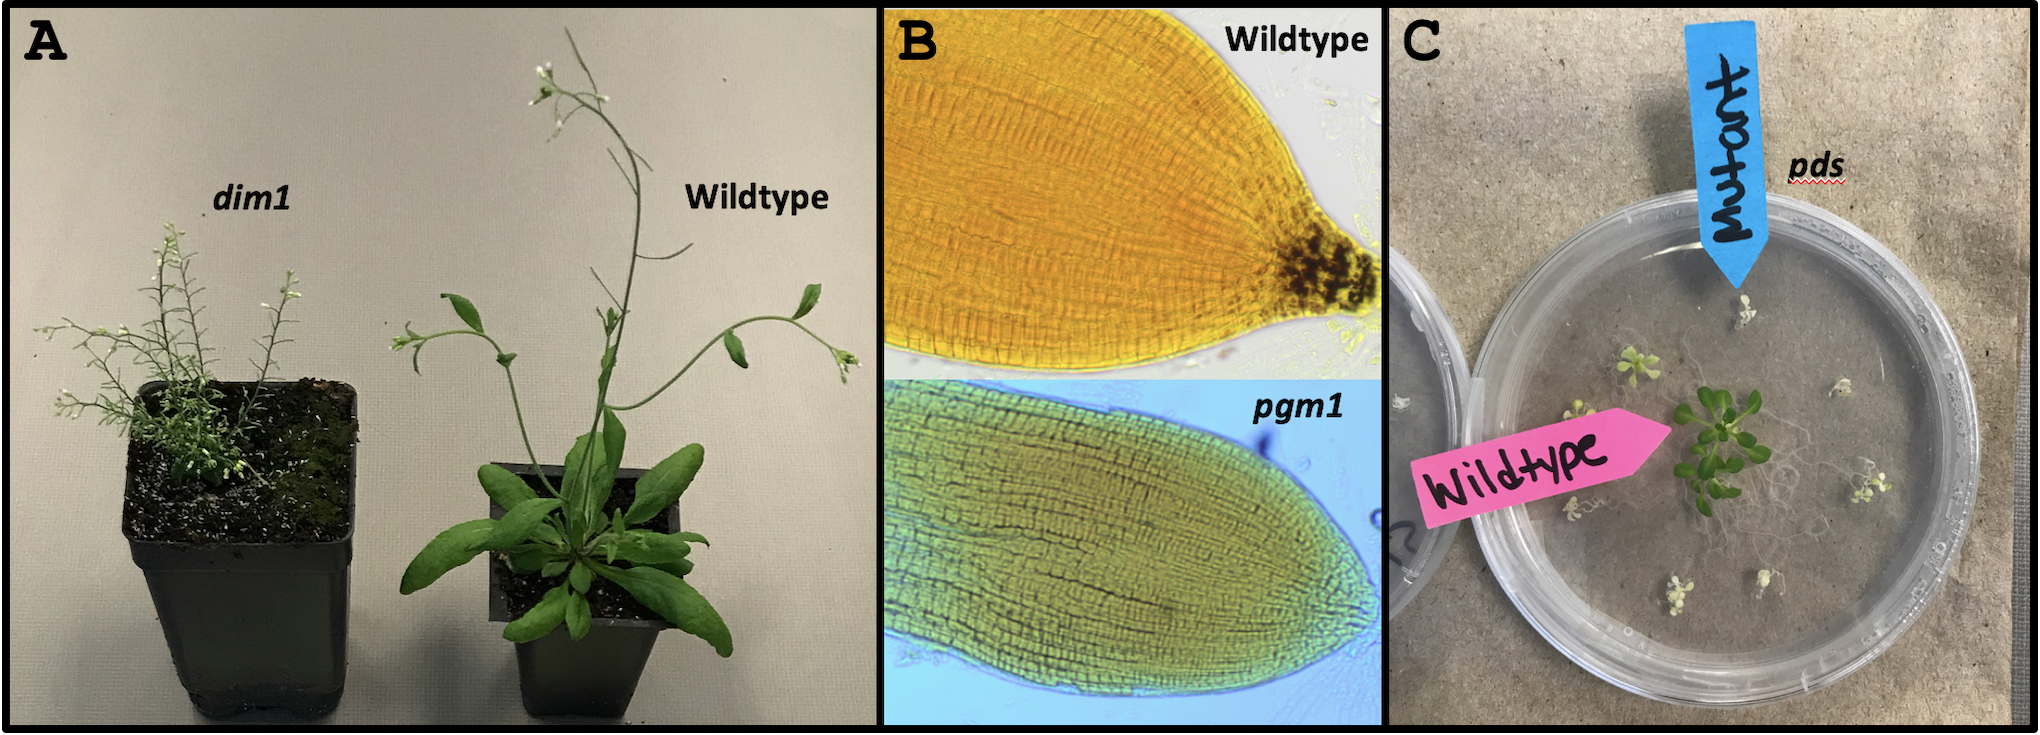 Figure 1. Phenotypes of wildtype Arabidopsis plants